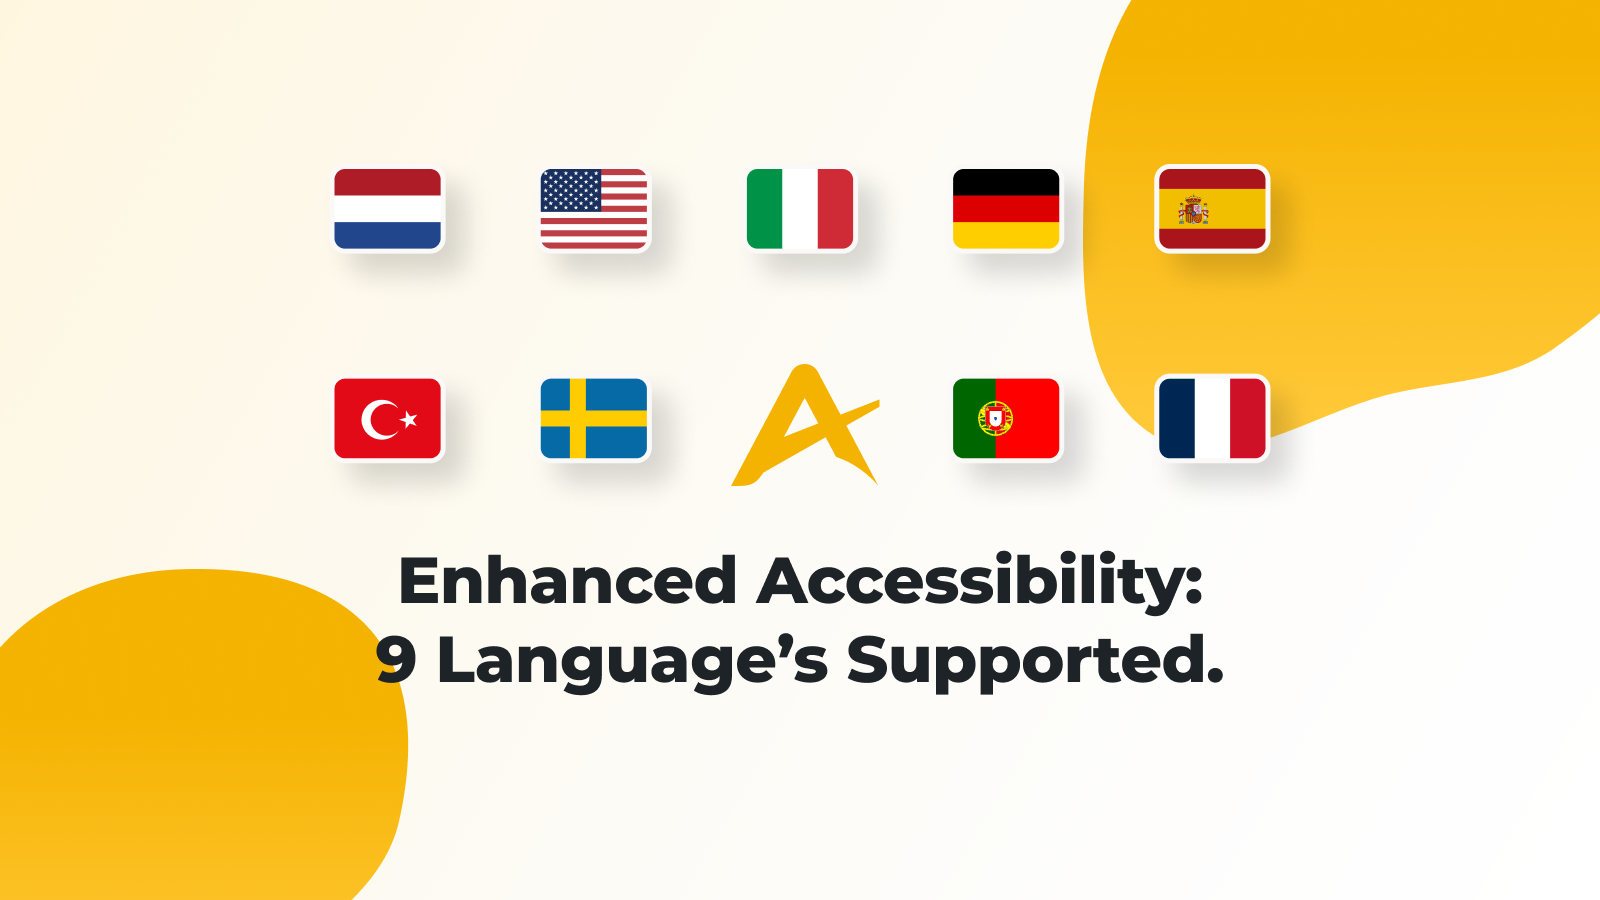 Arc Digitale Downloadbare Produkter: 9 sprog understøttet